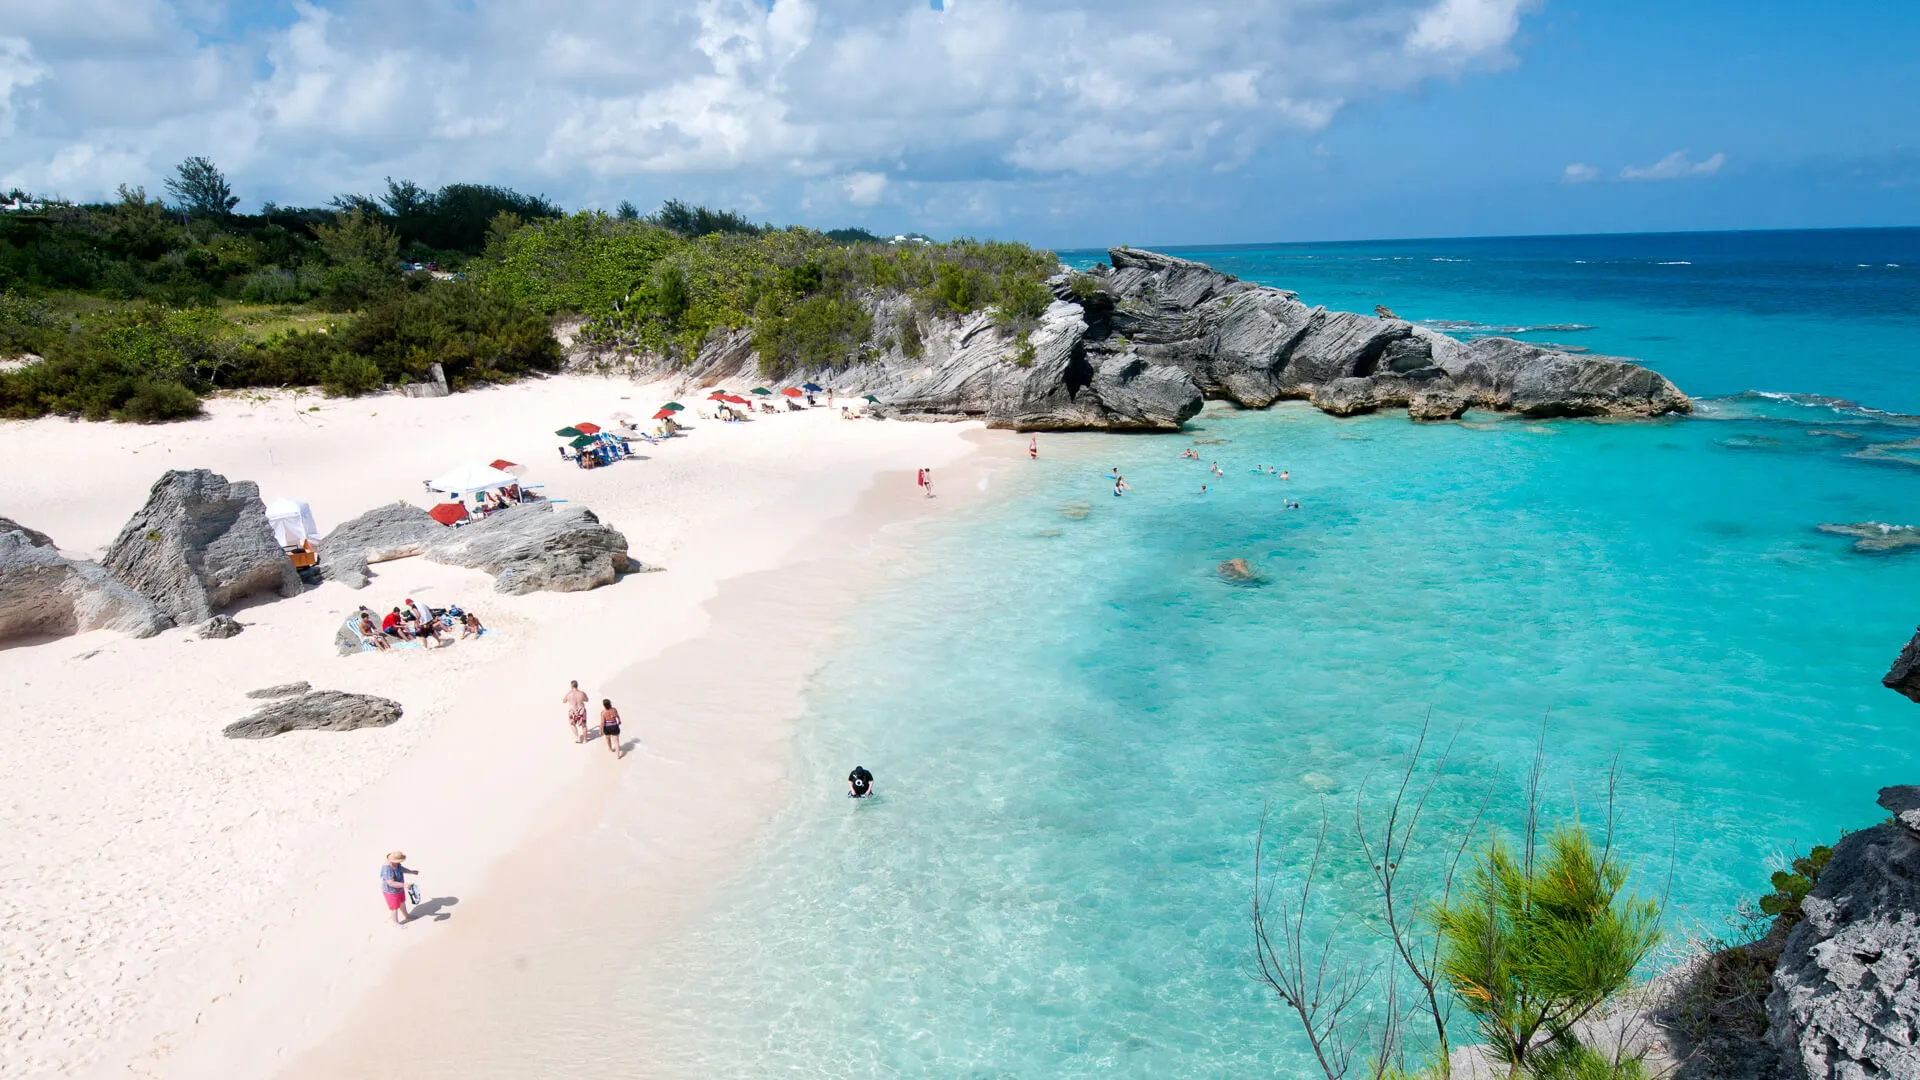 Bermuda is located in the North Atlantic Ocean.